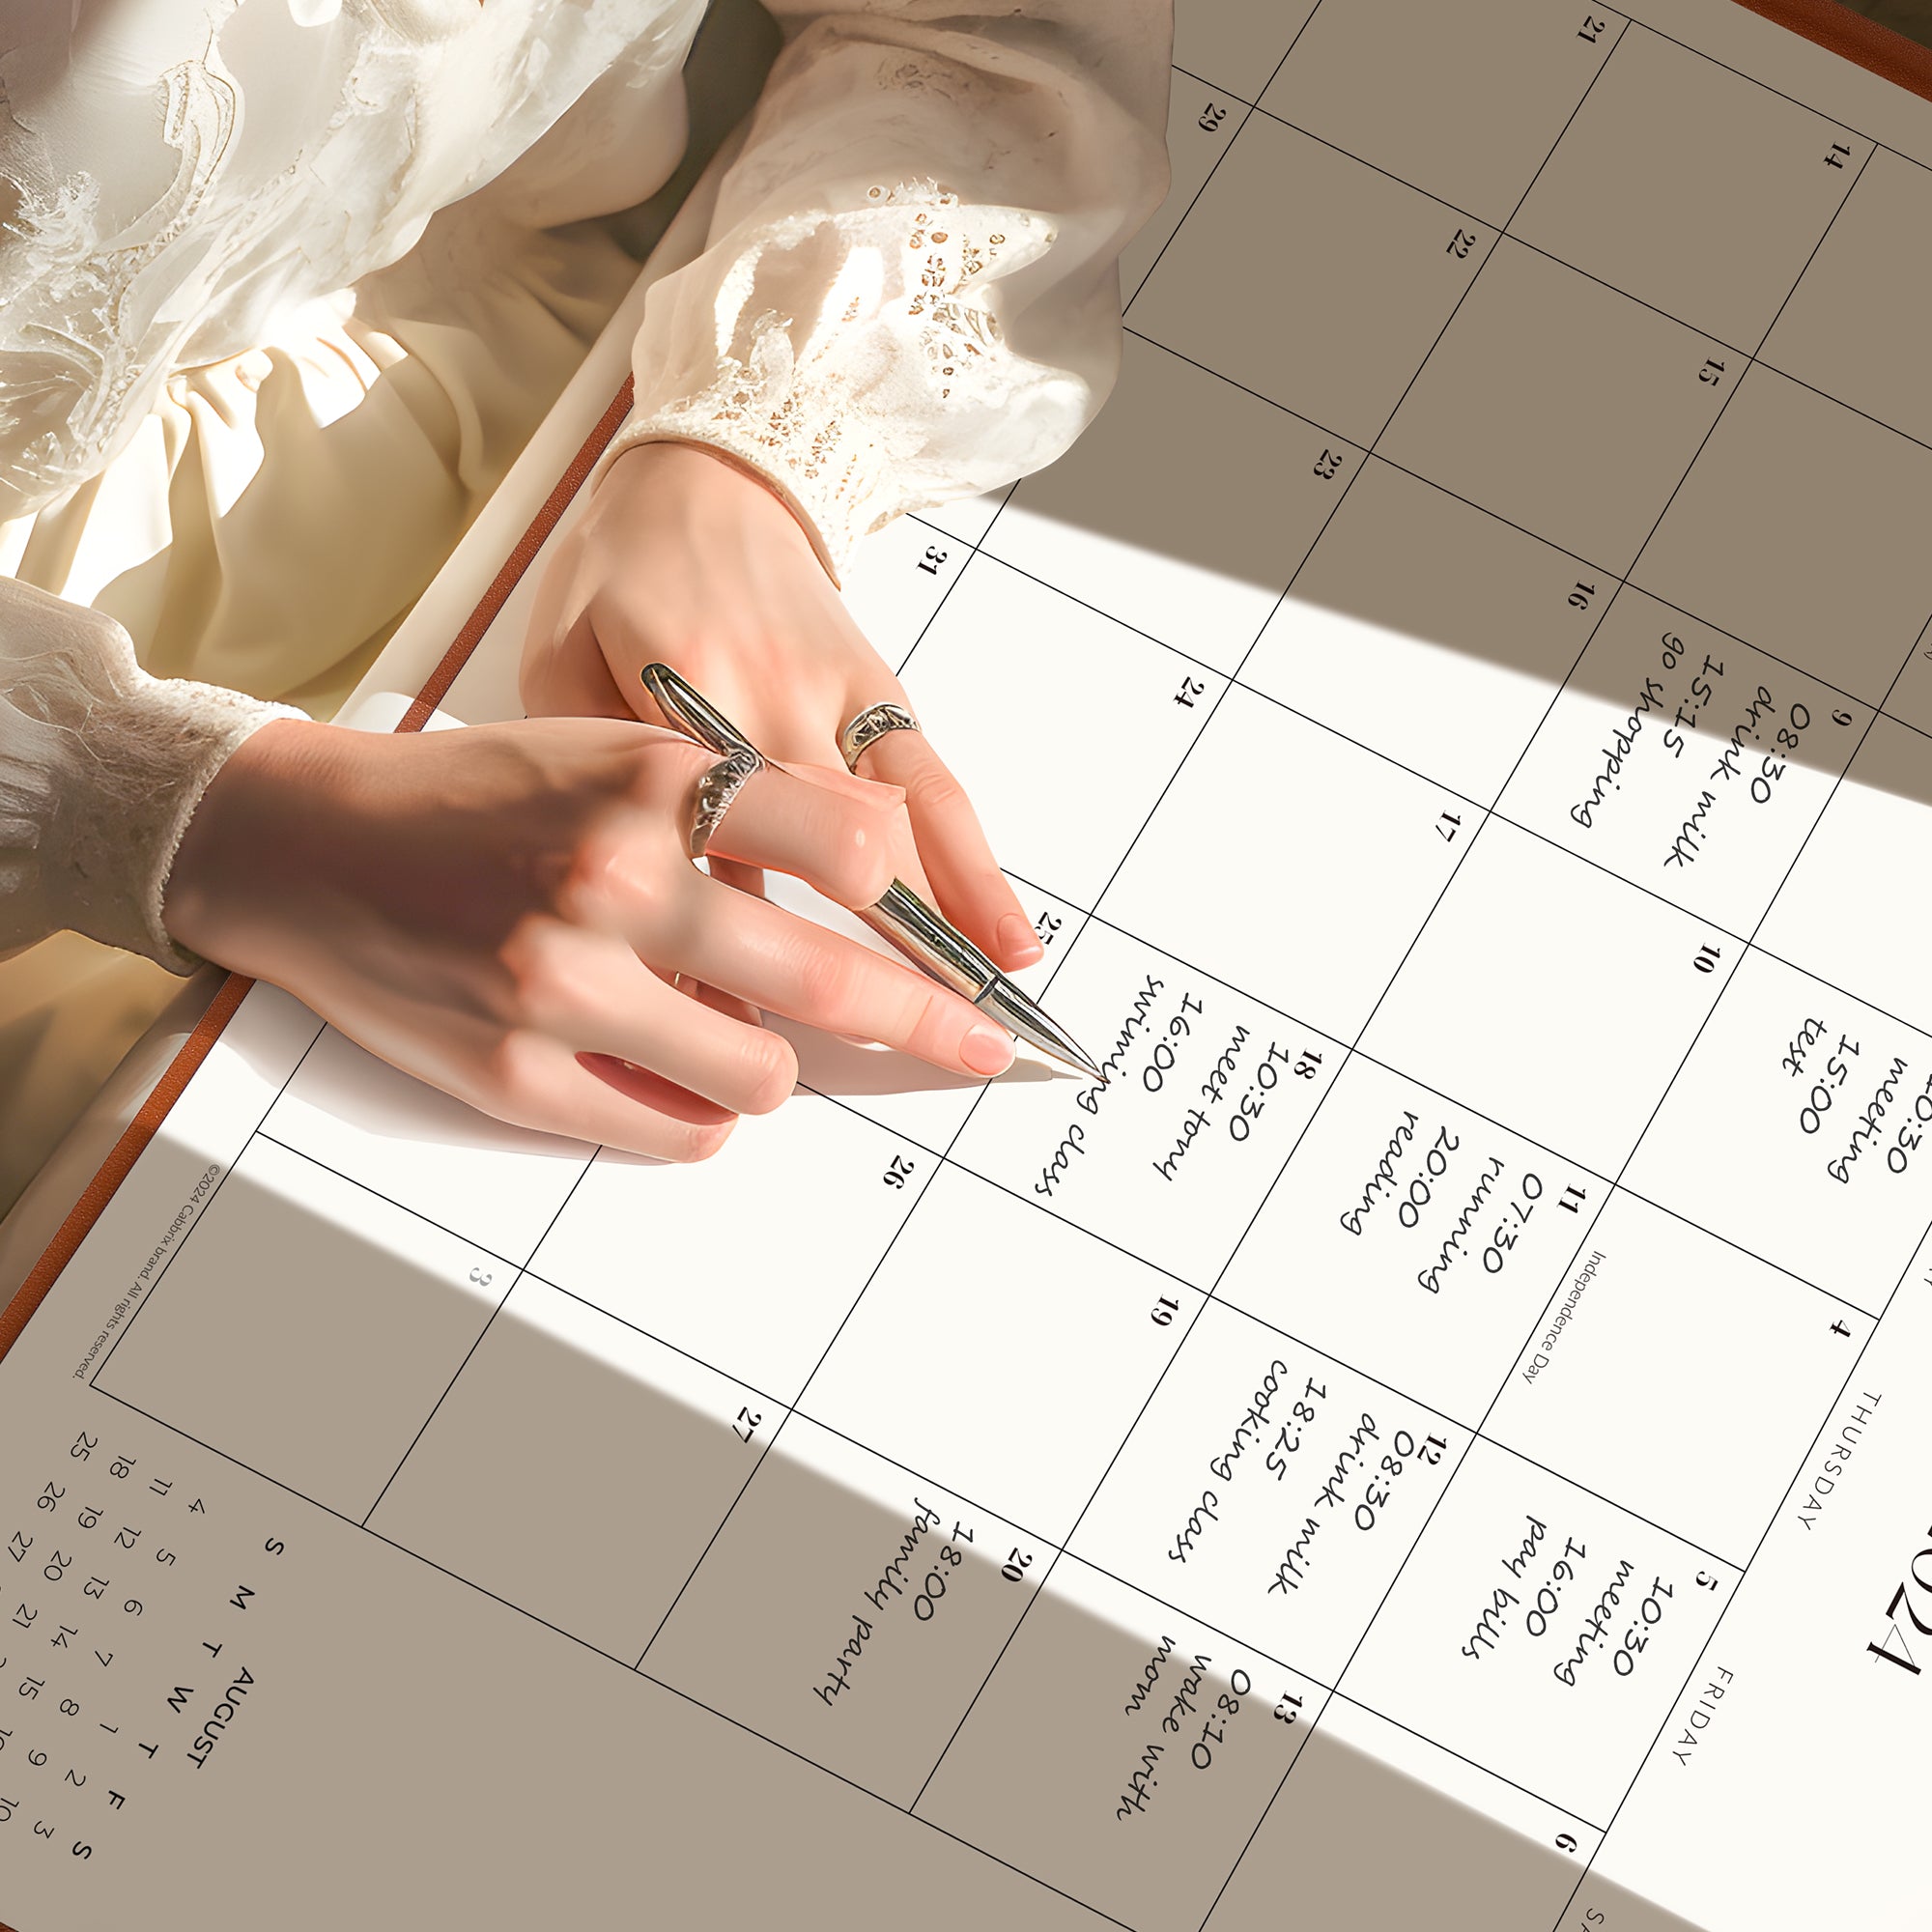 Jul 2024-Dec 2025 Desk Calendar